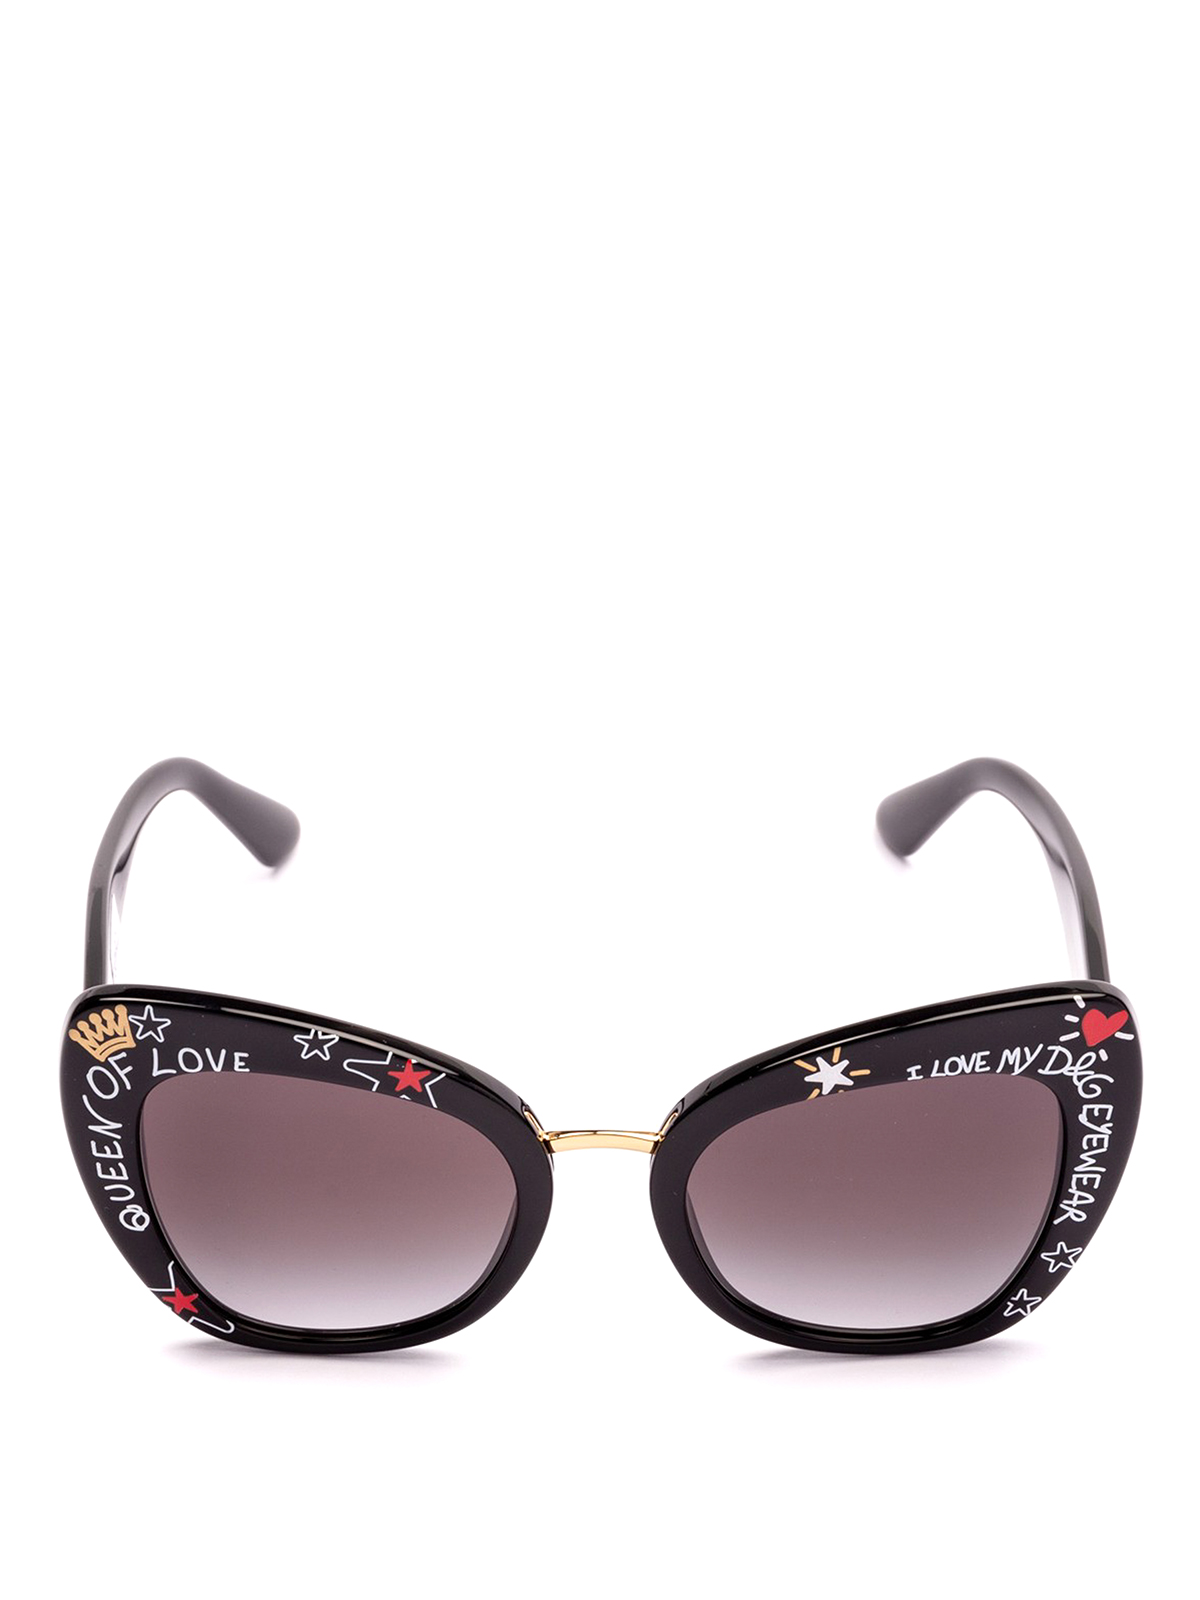 Sunglasses Dolce & Gabbana - Graffiti print acetate cat eye sunglasses -  DG431931808G